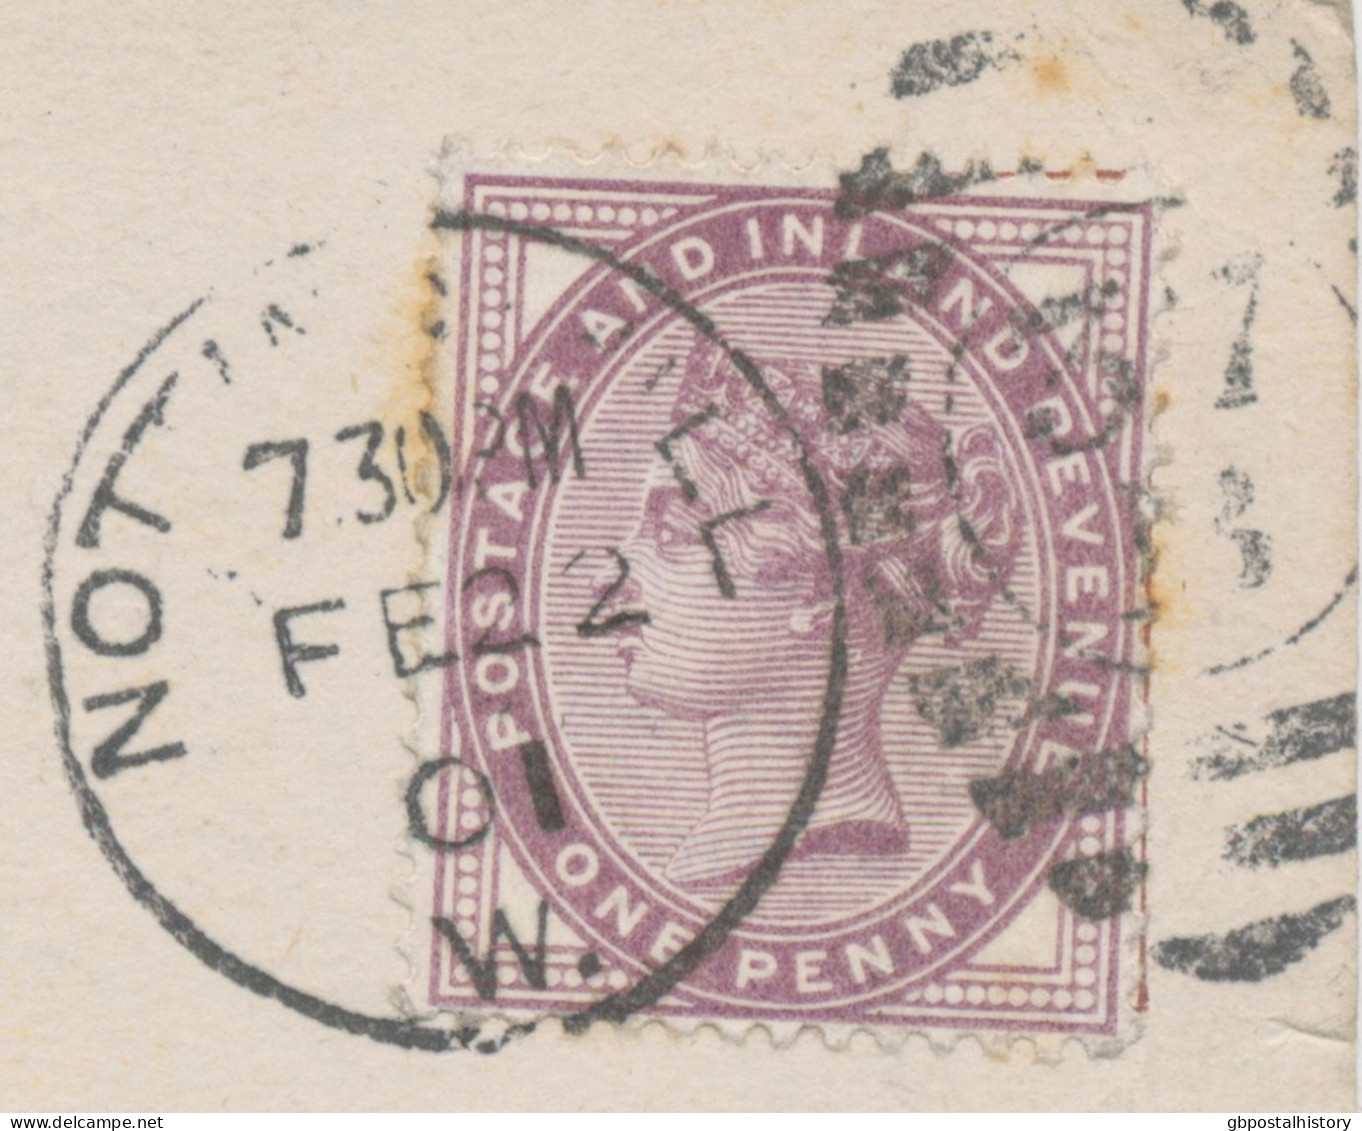 GB 1901, QV 1d Lilac 16 Dots On Superb Postcard To Frankfort With Barred Duplex-cancel "NOTTING-HILL / W. / 37 B" - Briefe U. Dokumente